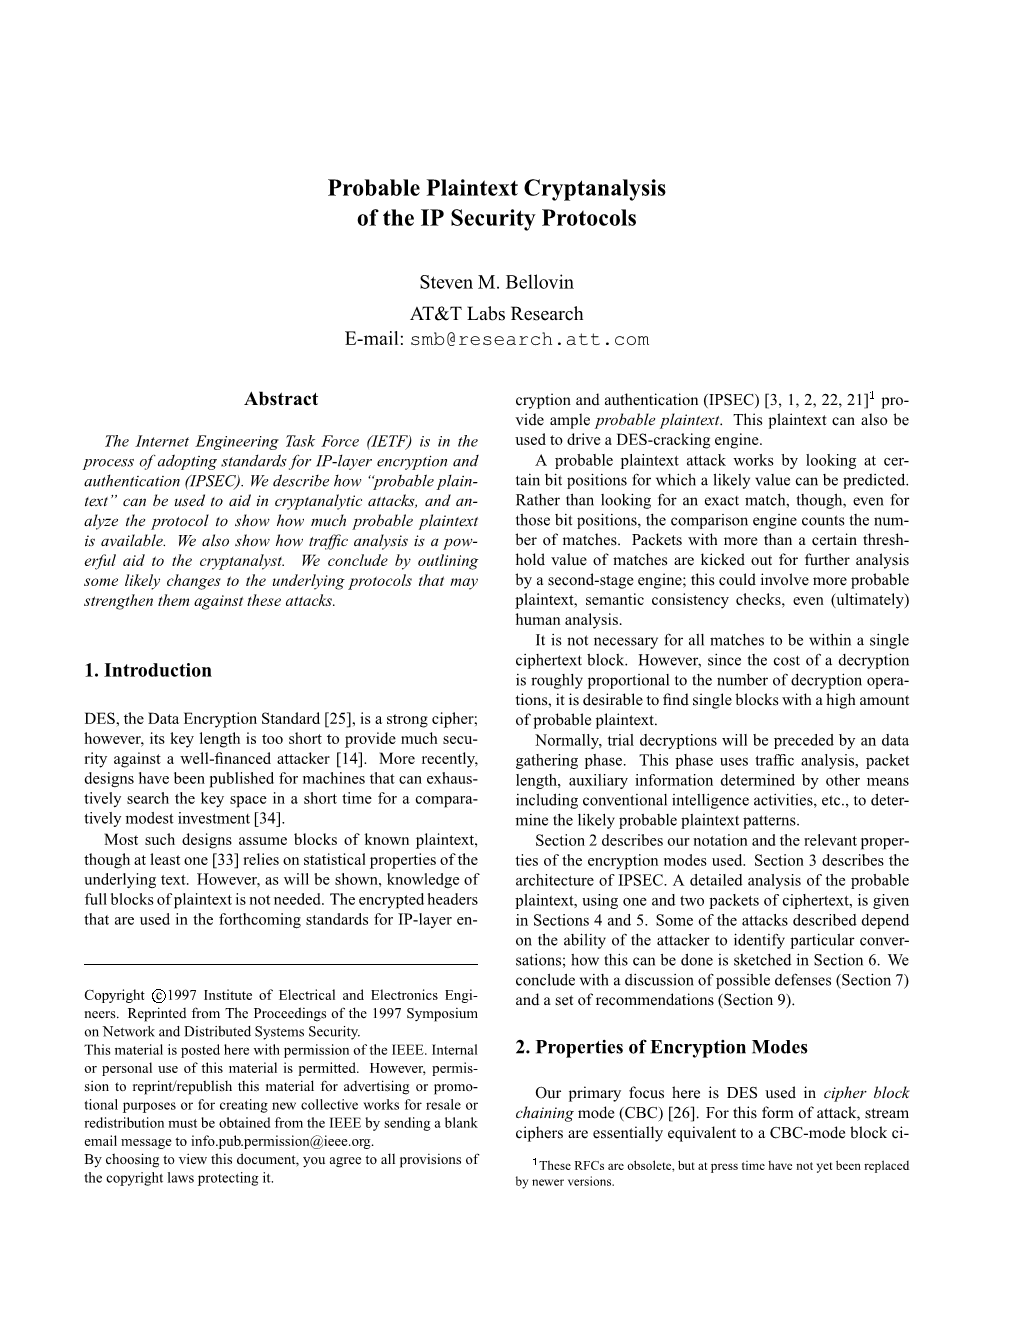 Probable Plaintext Cryptanalysis of the IP Security Protocols